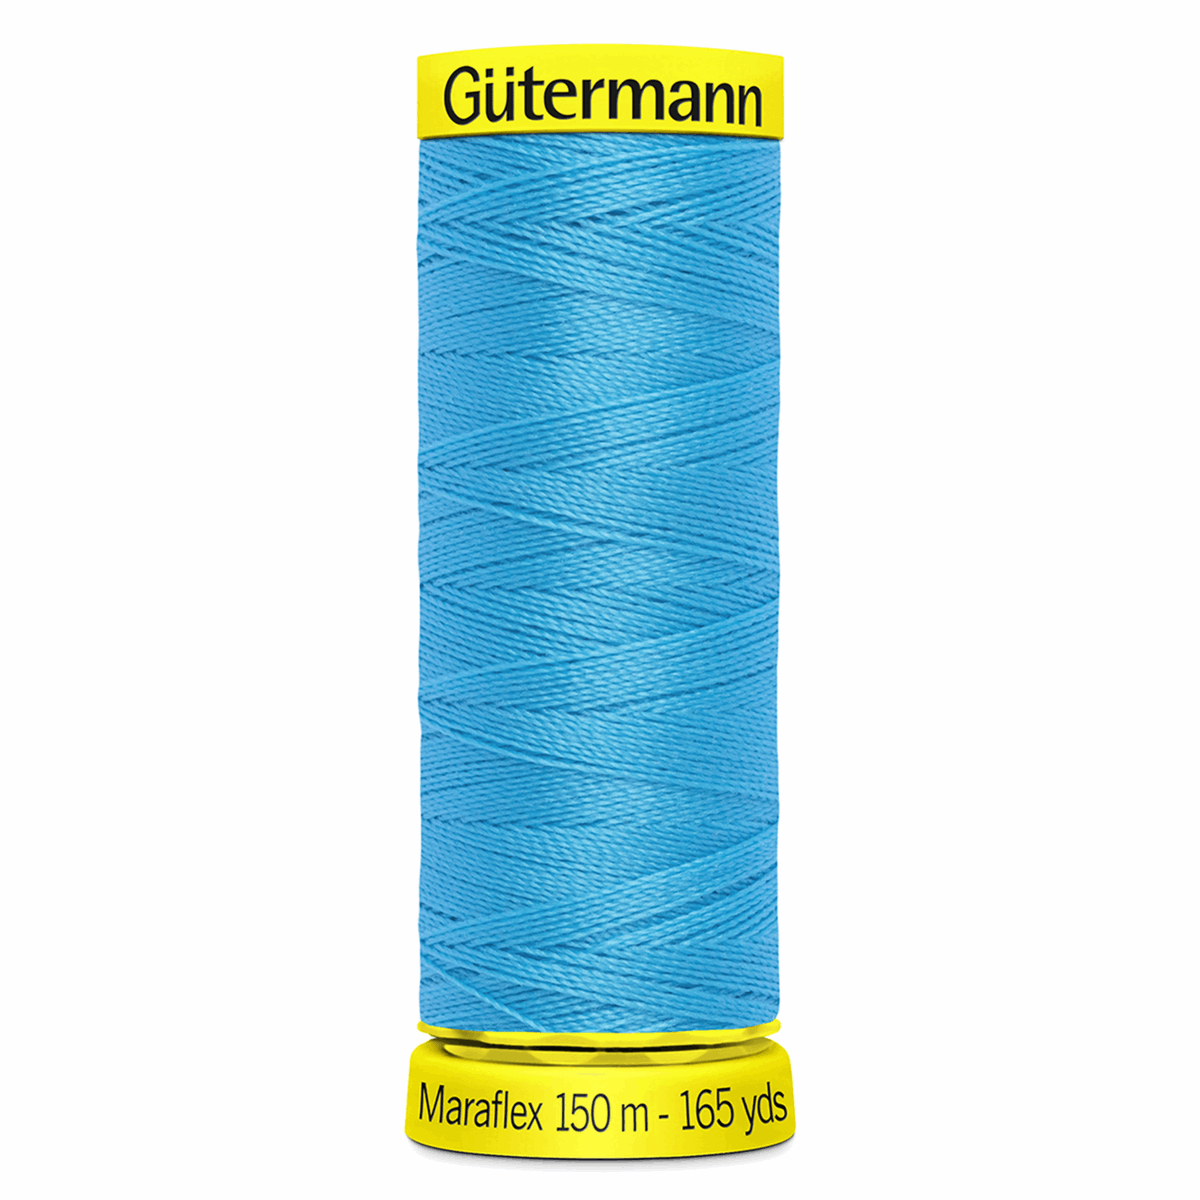 Gutermann Maraflex Elastic Sewing Thread 150m Turquoise 5396 